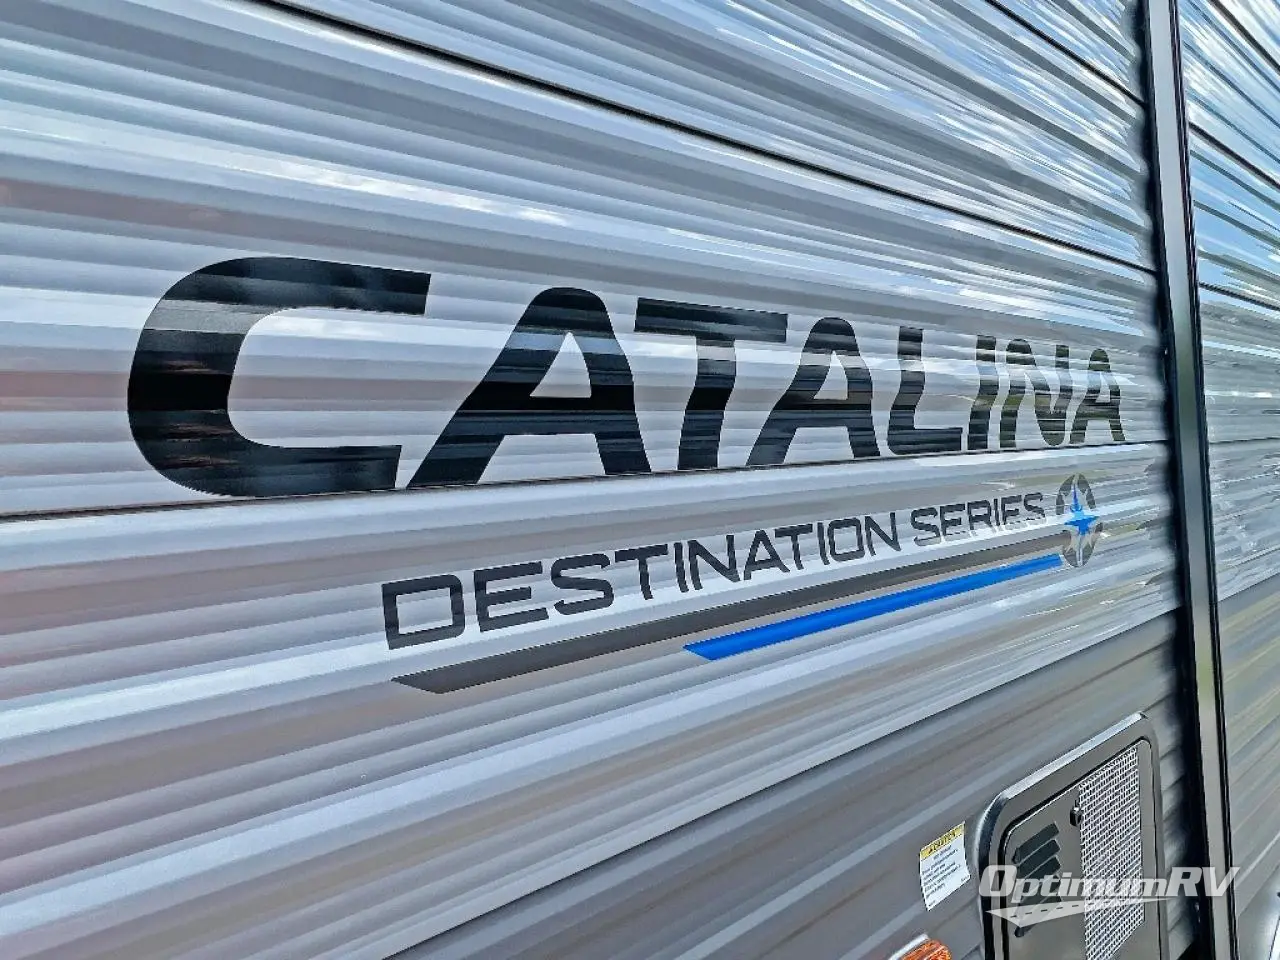 2023 Coachmen Catalina Destination Series 39RLTS Photo 7